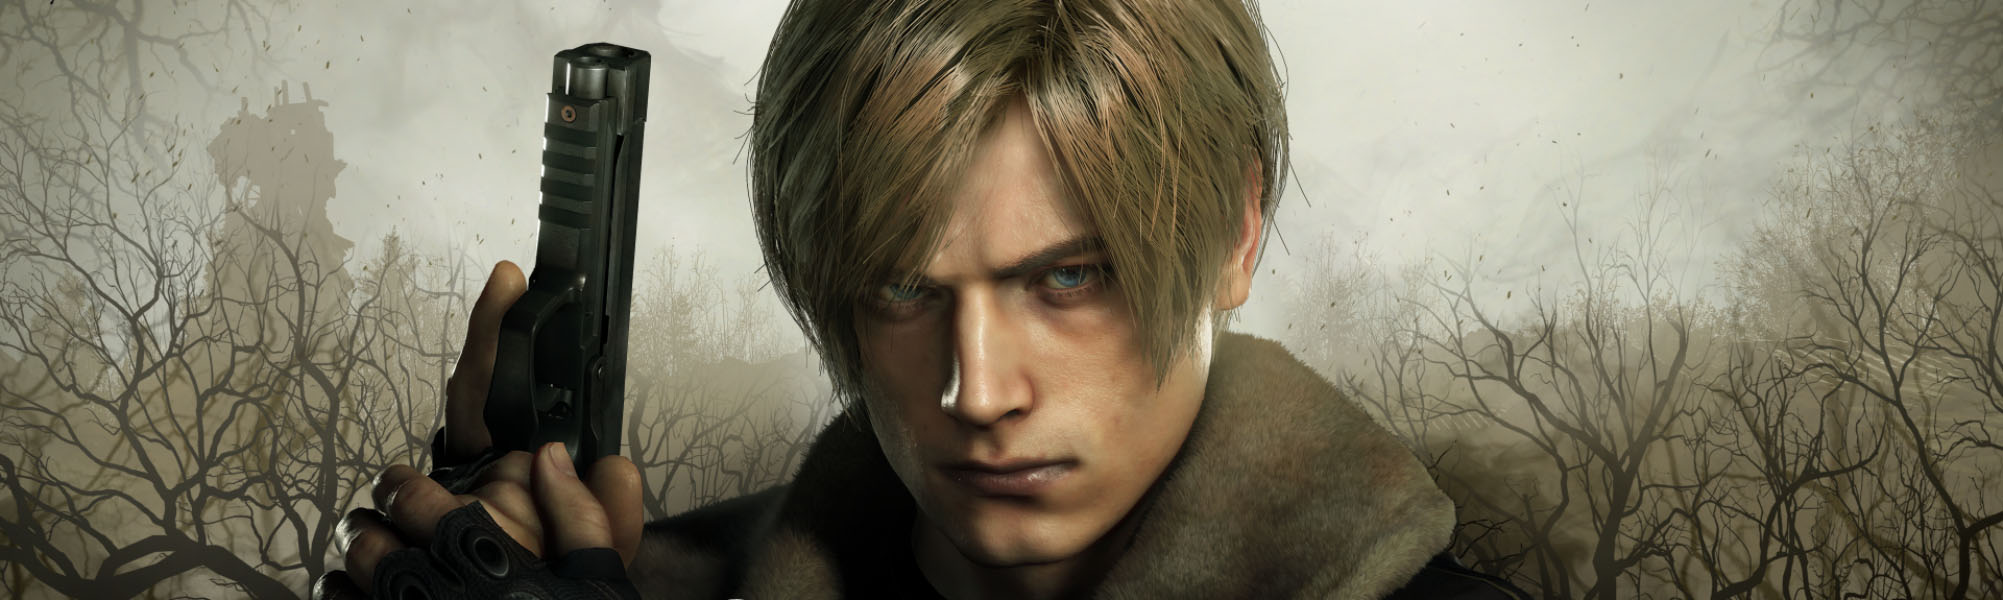 Resident Evil™4: VR Modus ab dem 8. Dezember verfügbar!